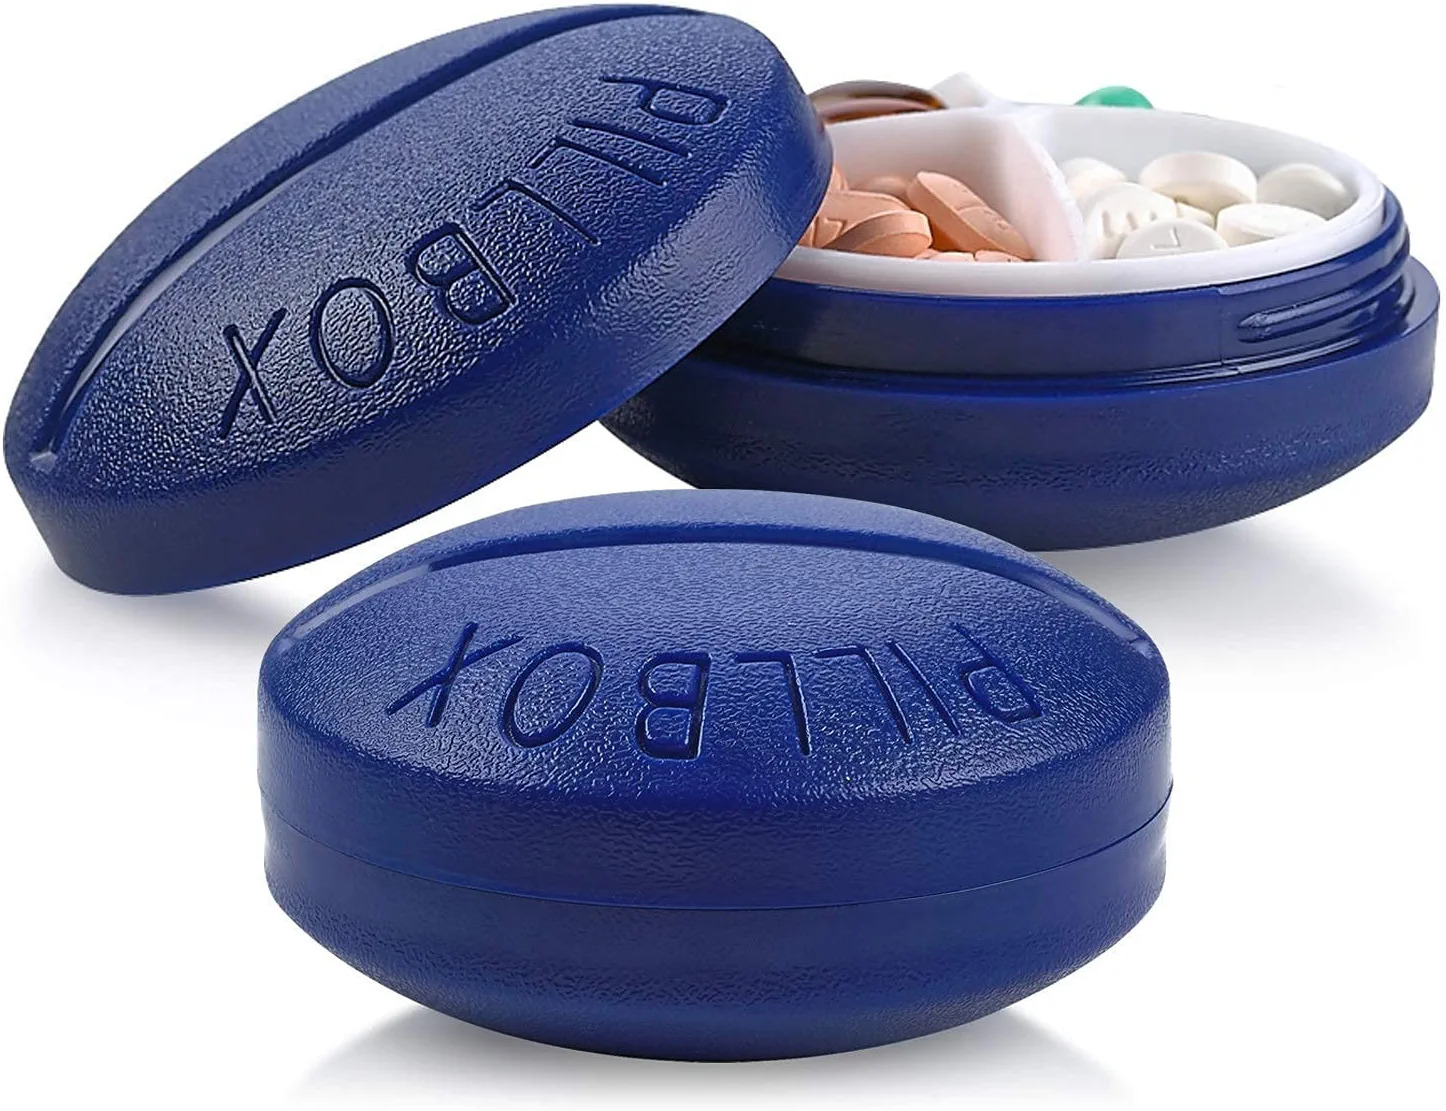 Travel Pill Case